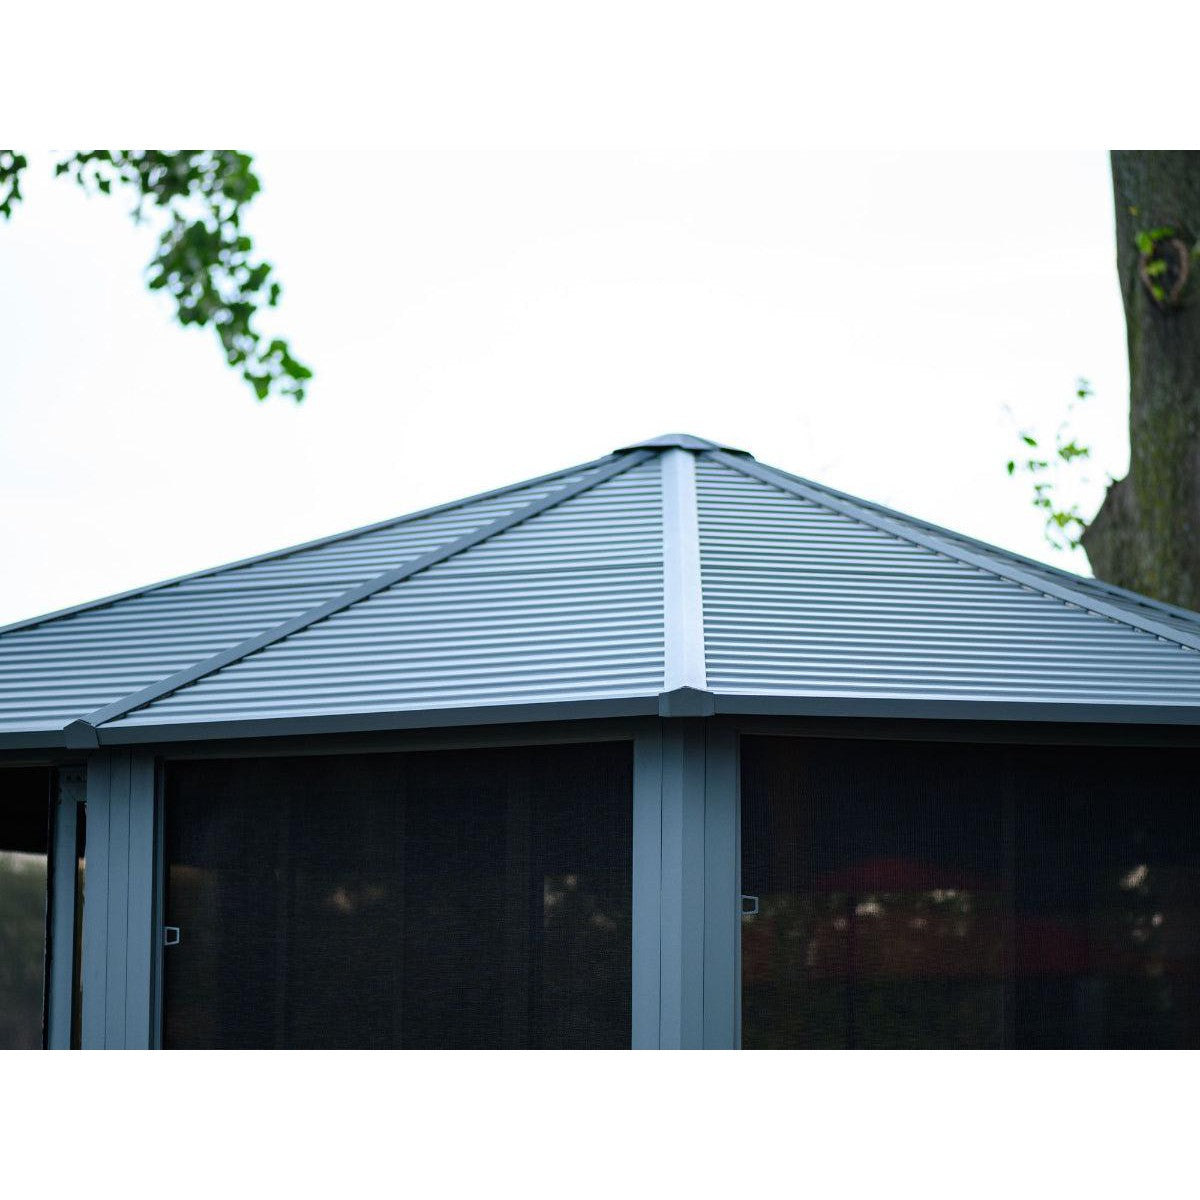 Florence Aluminum Solarium Metal Roof 12 x 15 ft. | Gazebo PenGuin-Delightful Yard